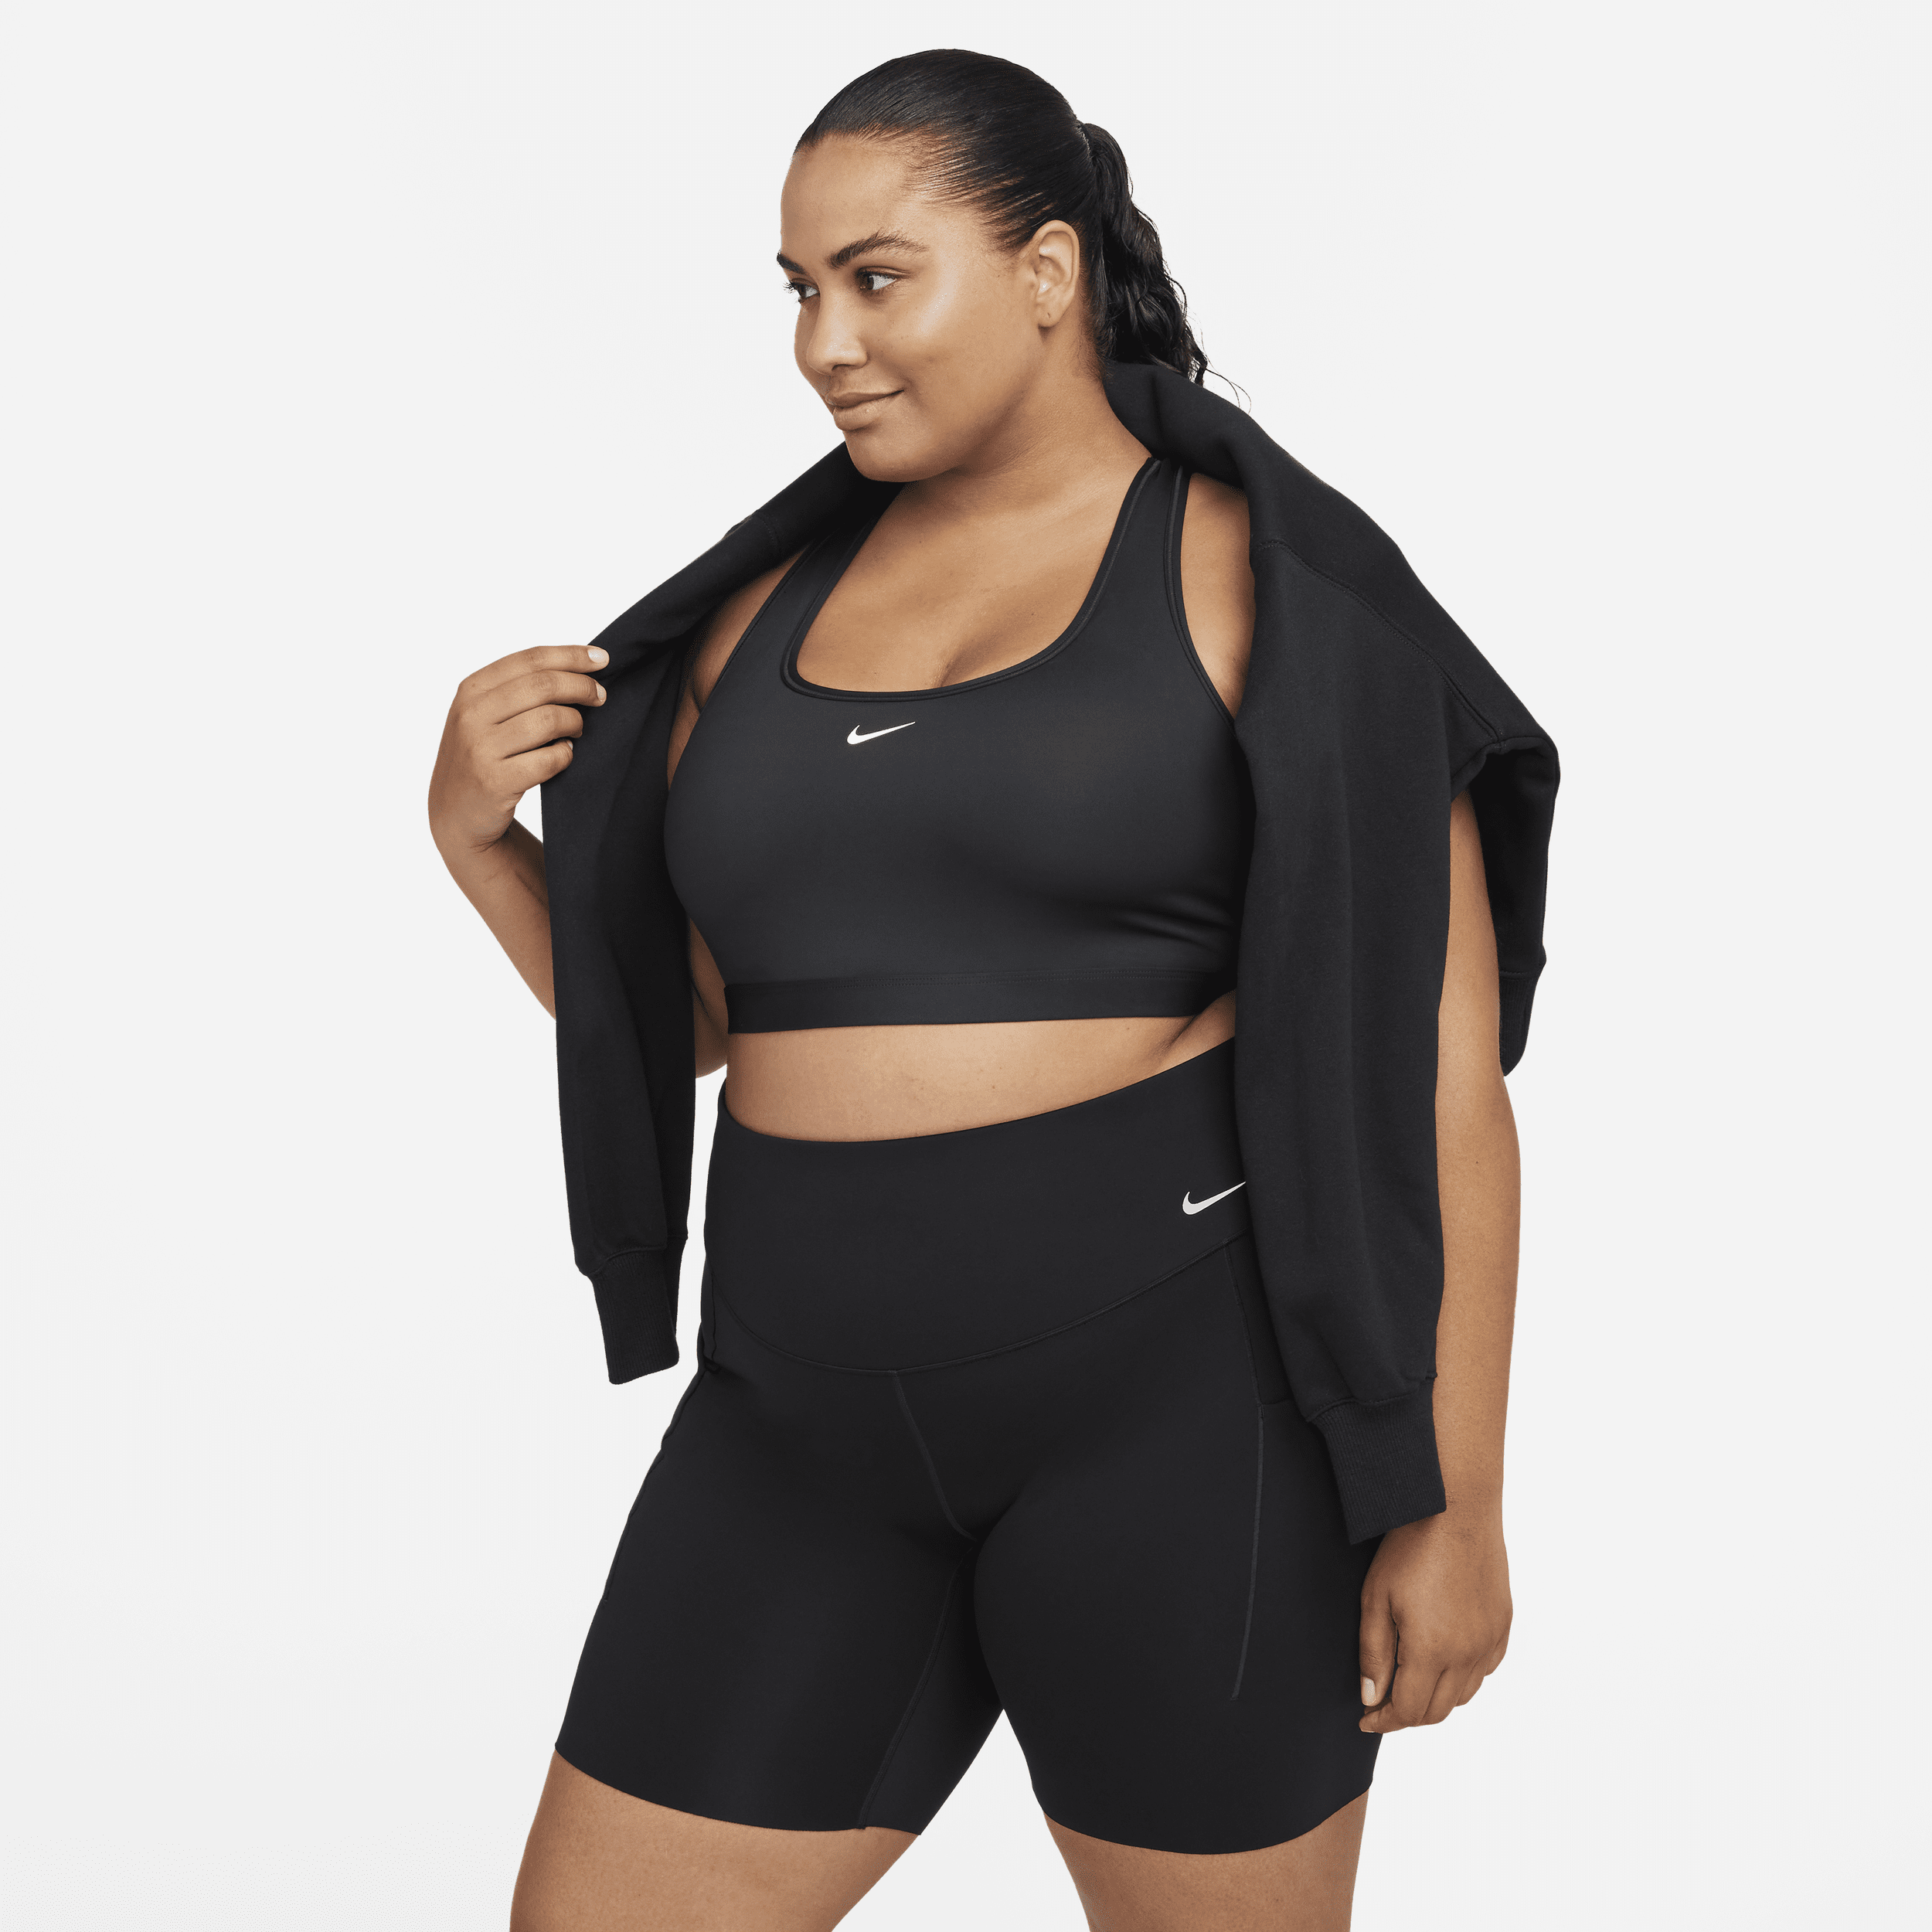 Nike Universa-cykelshorts (20 cm) med medium støtte, høj talje og lommer til kvinder (plus size) - sort